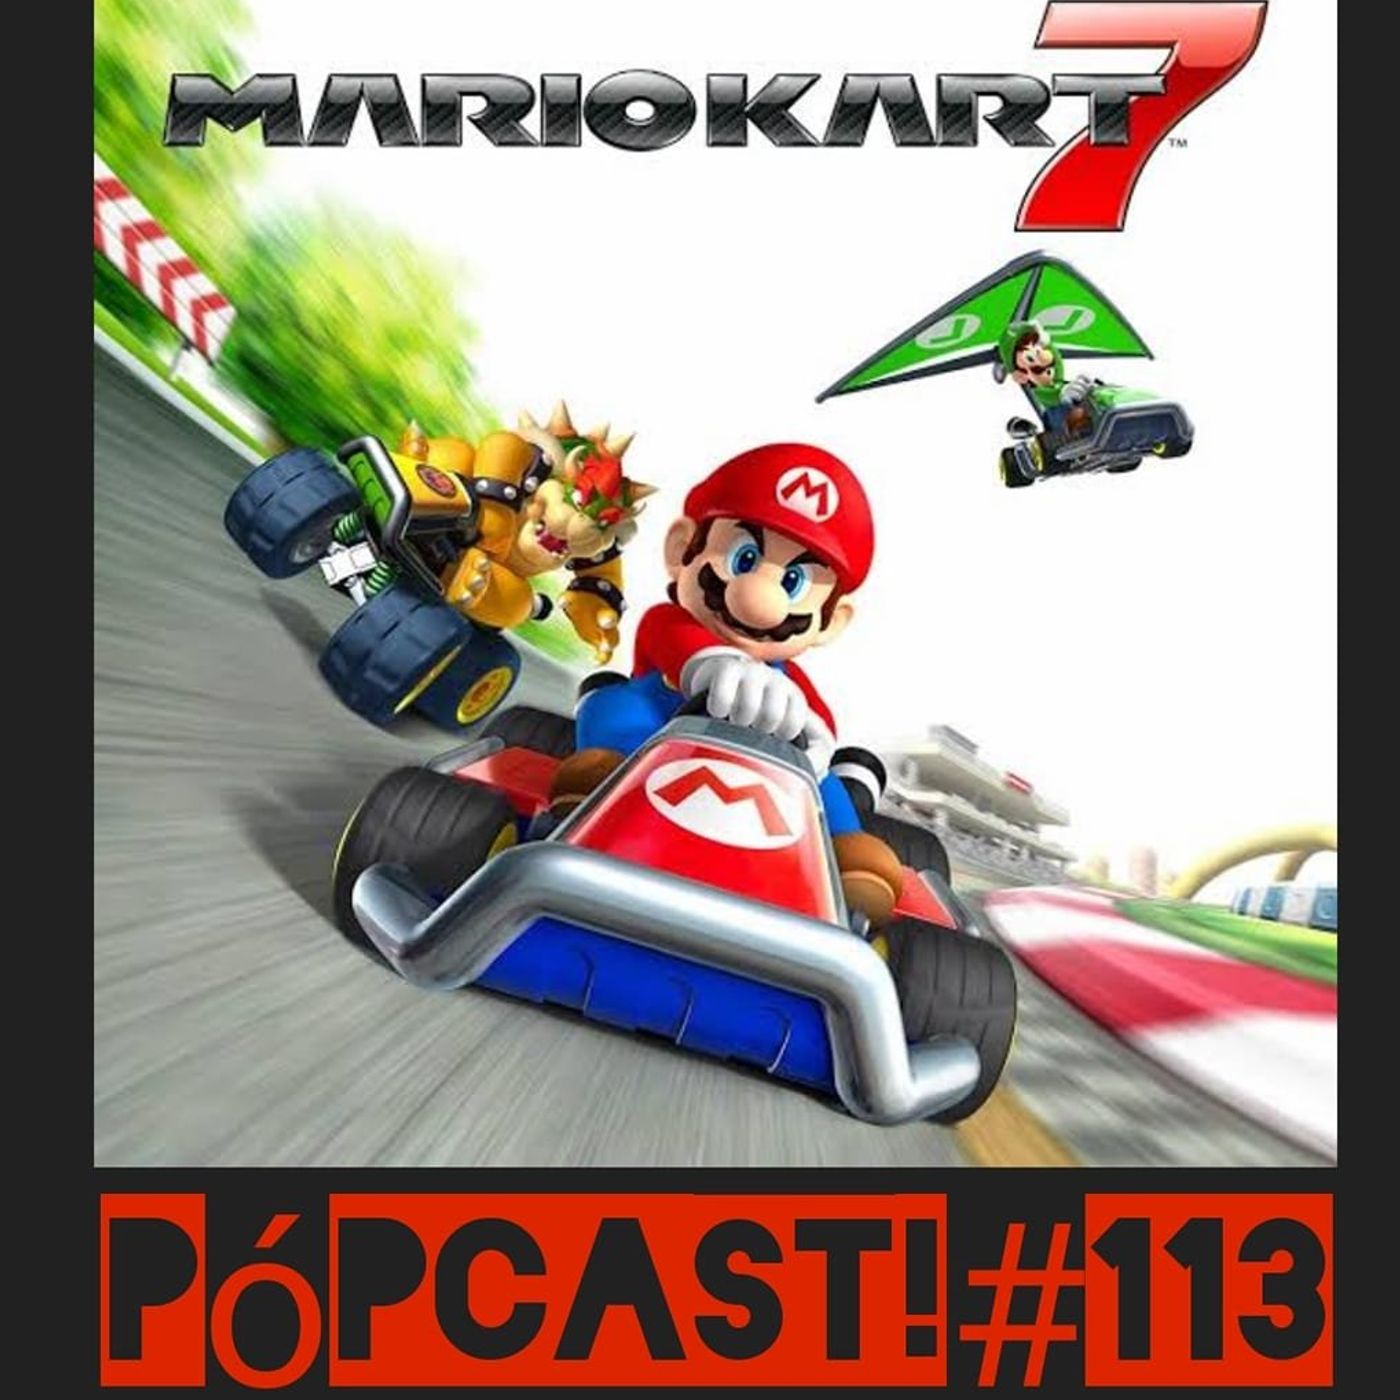 Pópcast! #113 - Mario Kart 7